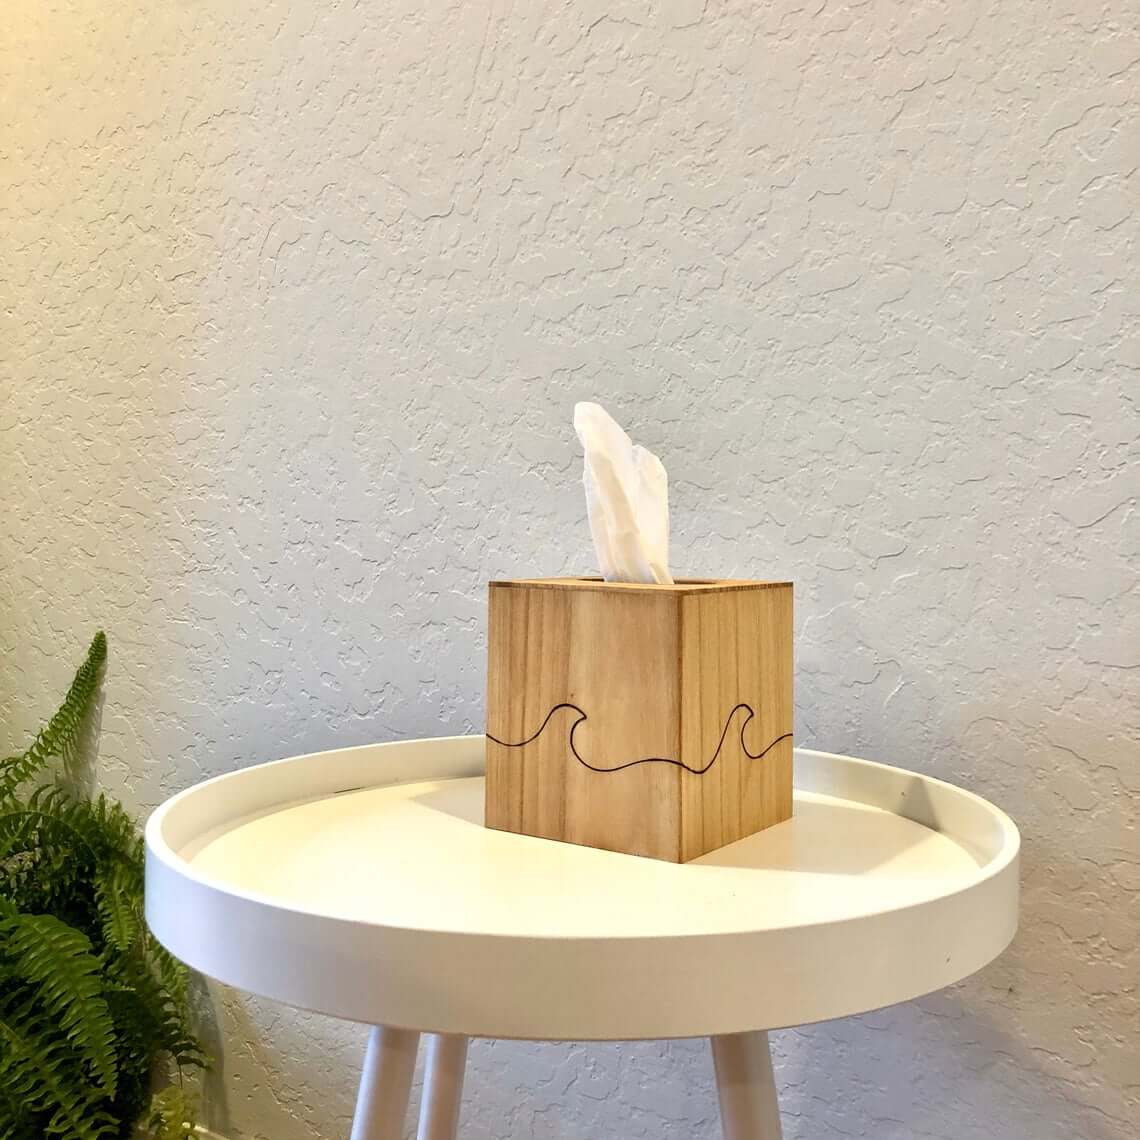 Wooden Tissue Box Holder with Wave Design